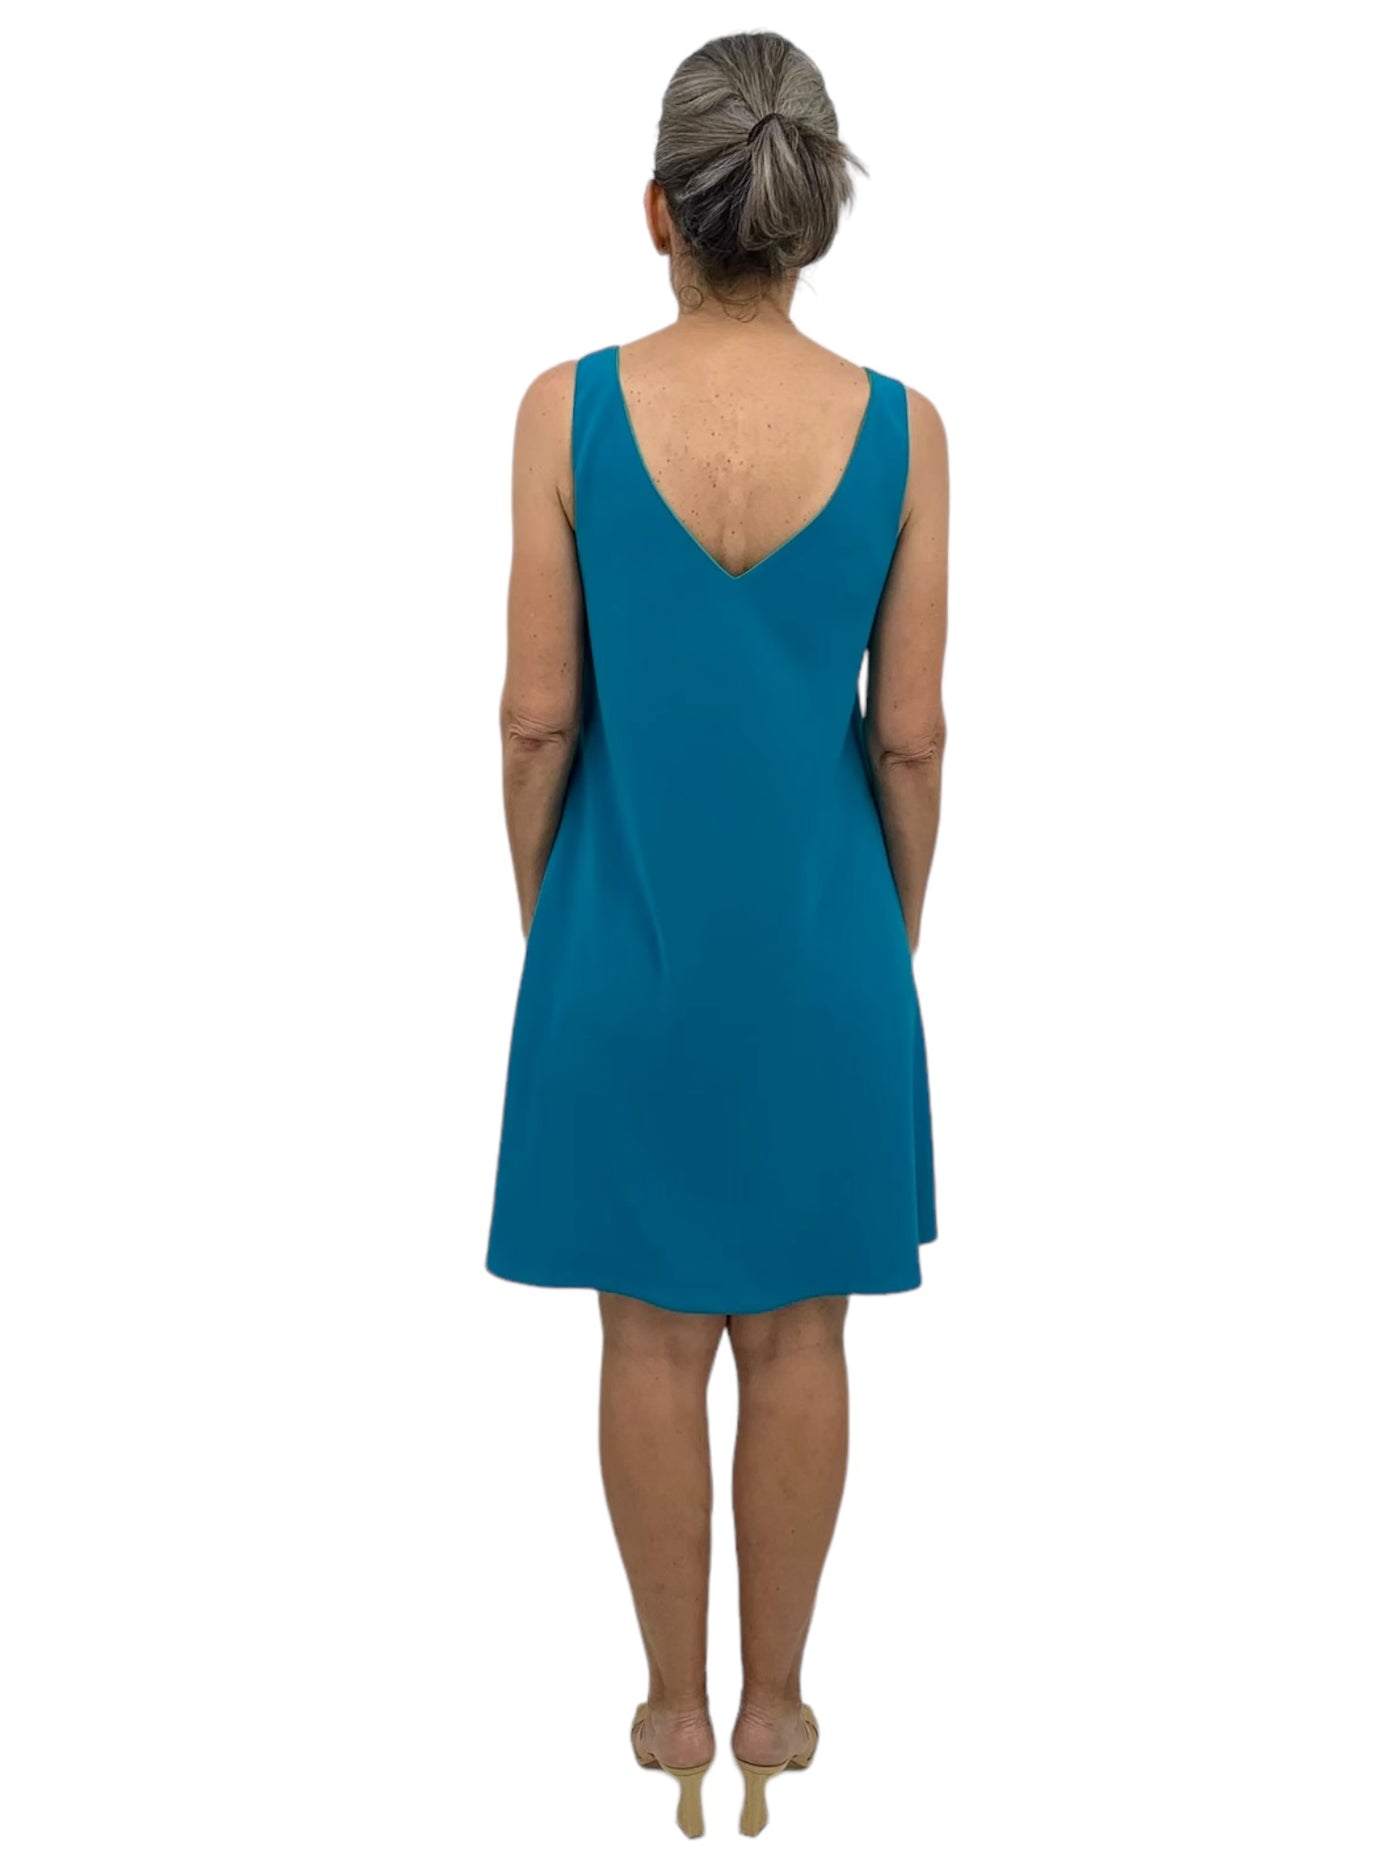 Reversible V-Neck Dress in Jade/Tourmaline